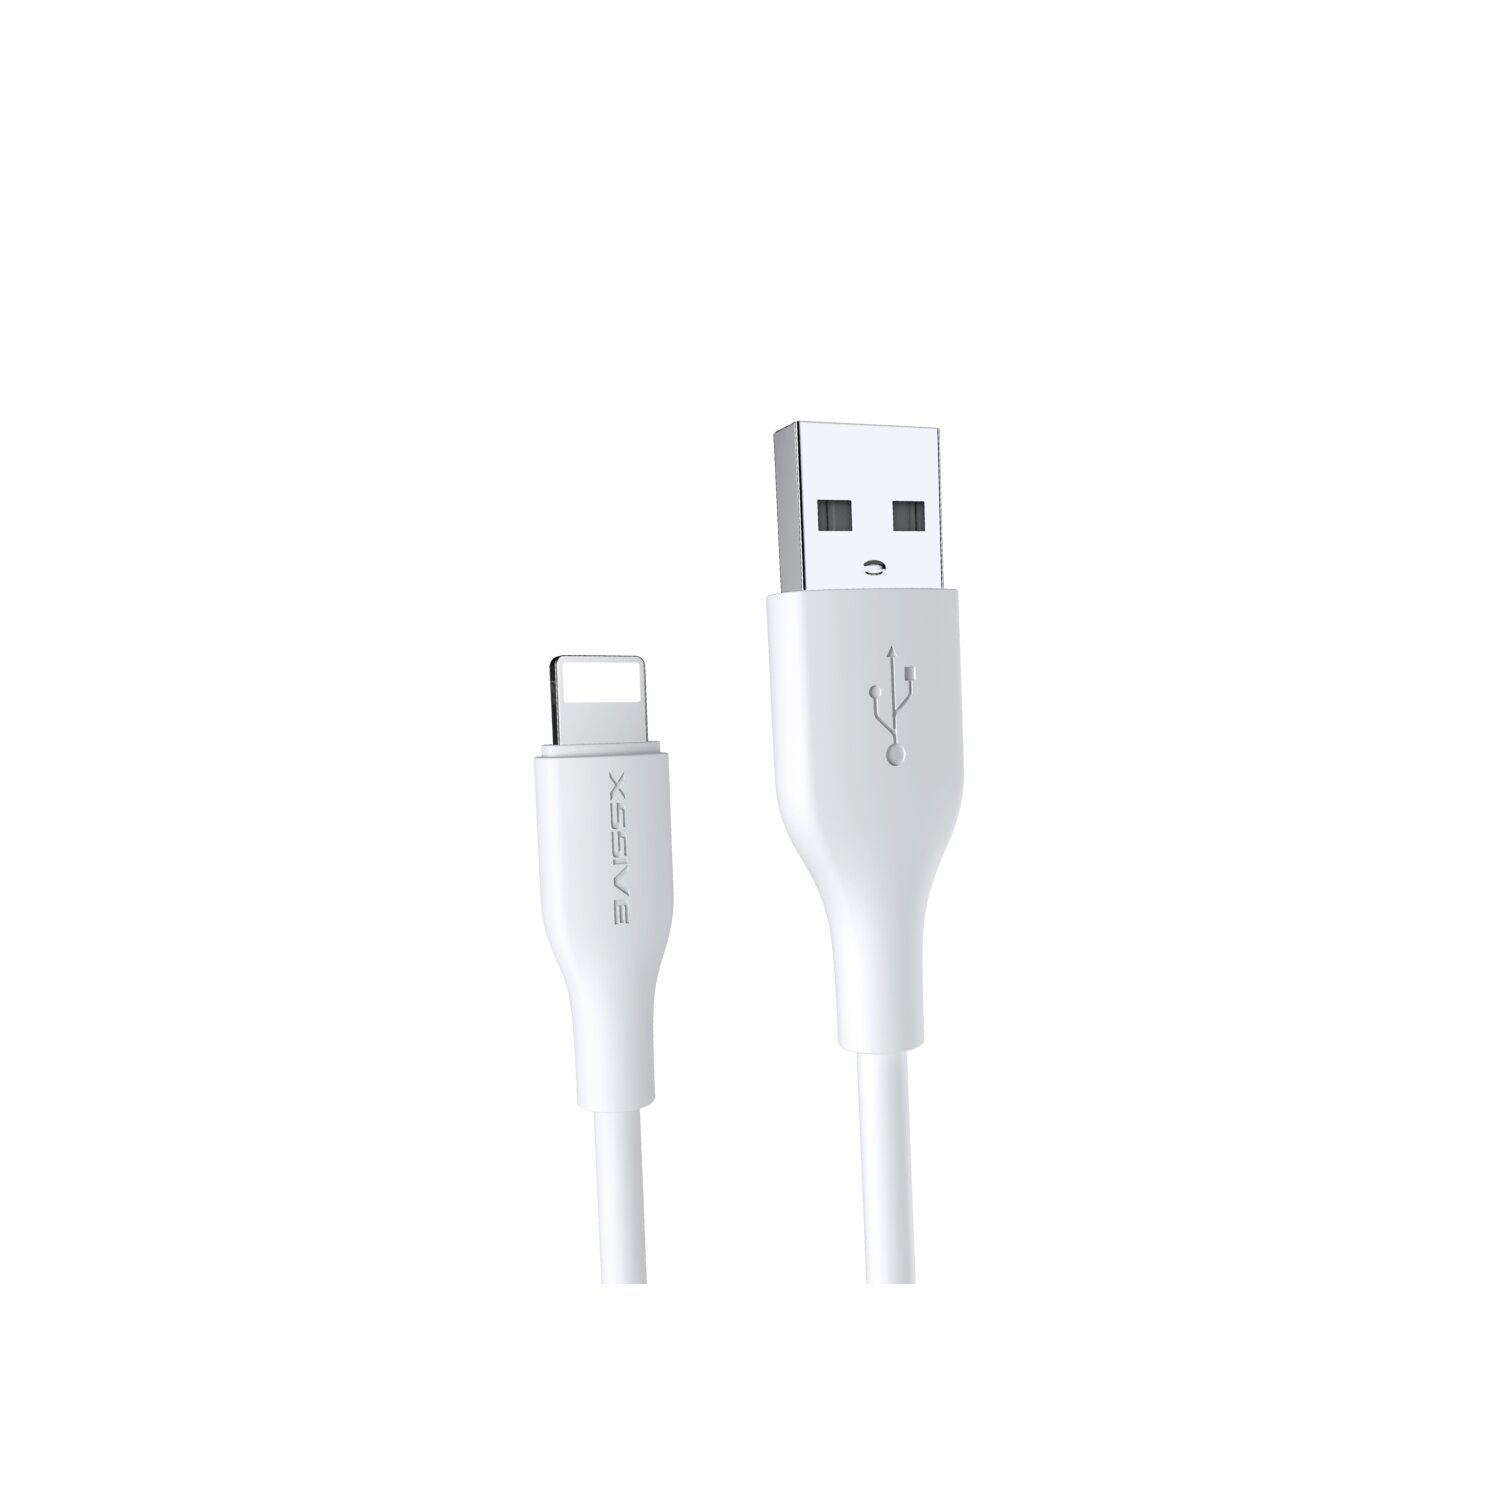 COFI Meter 2.4A iOS, USB 2 zu Ladekabel, Weiß